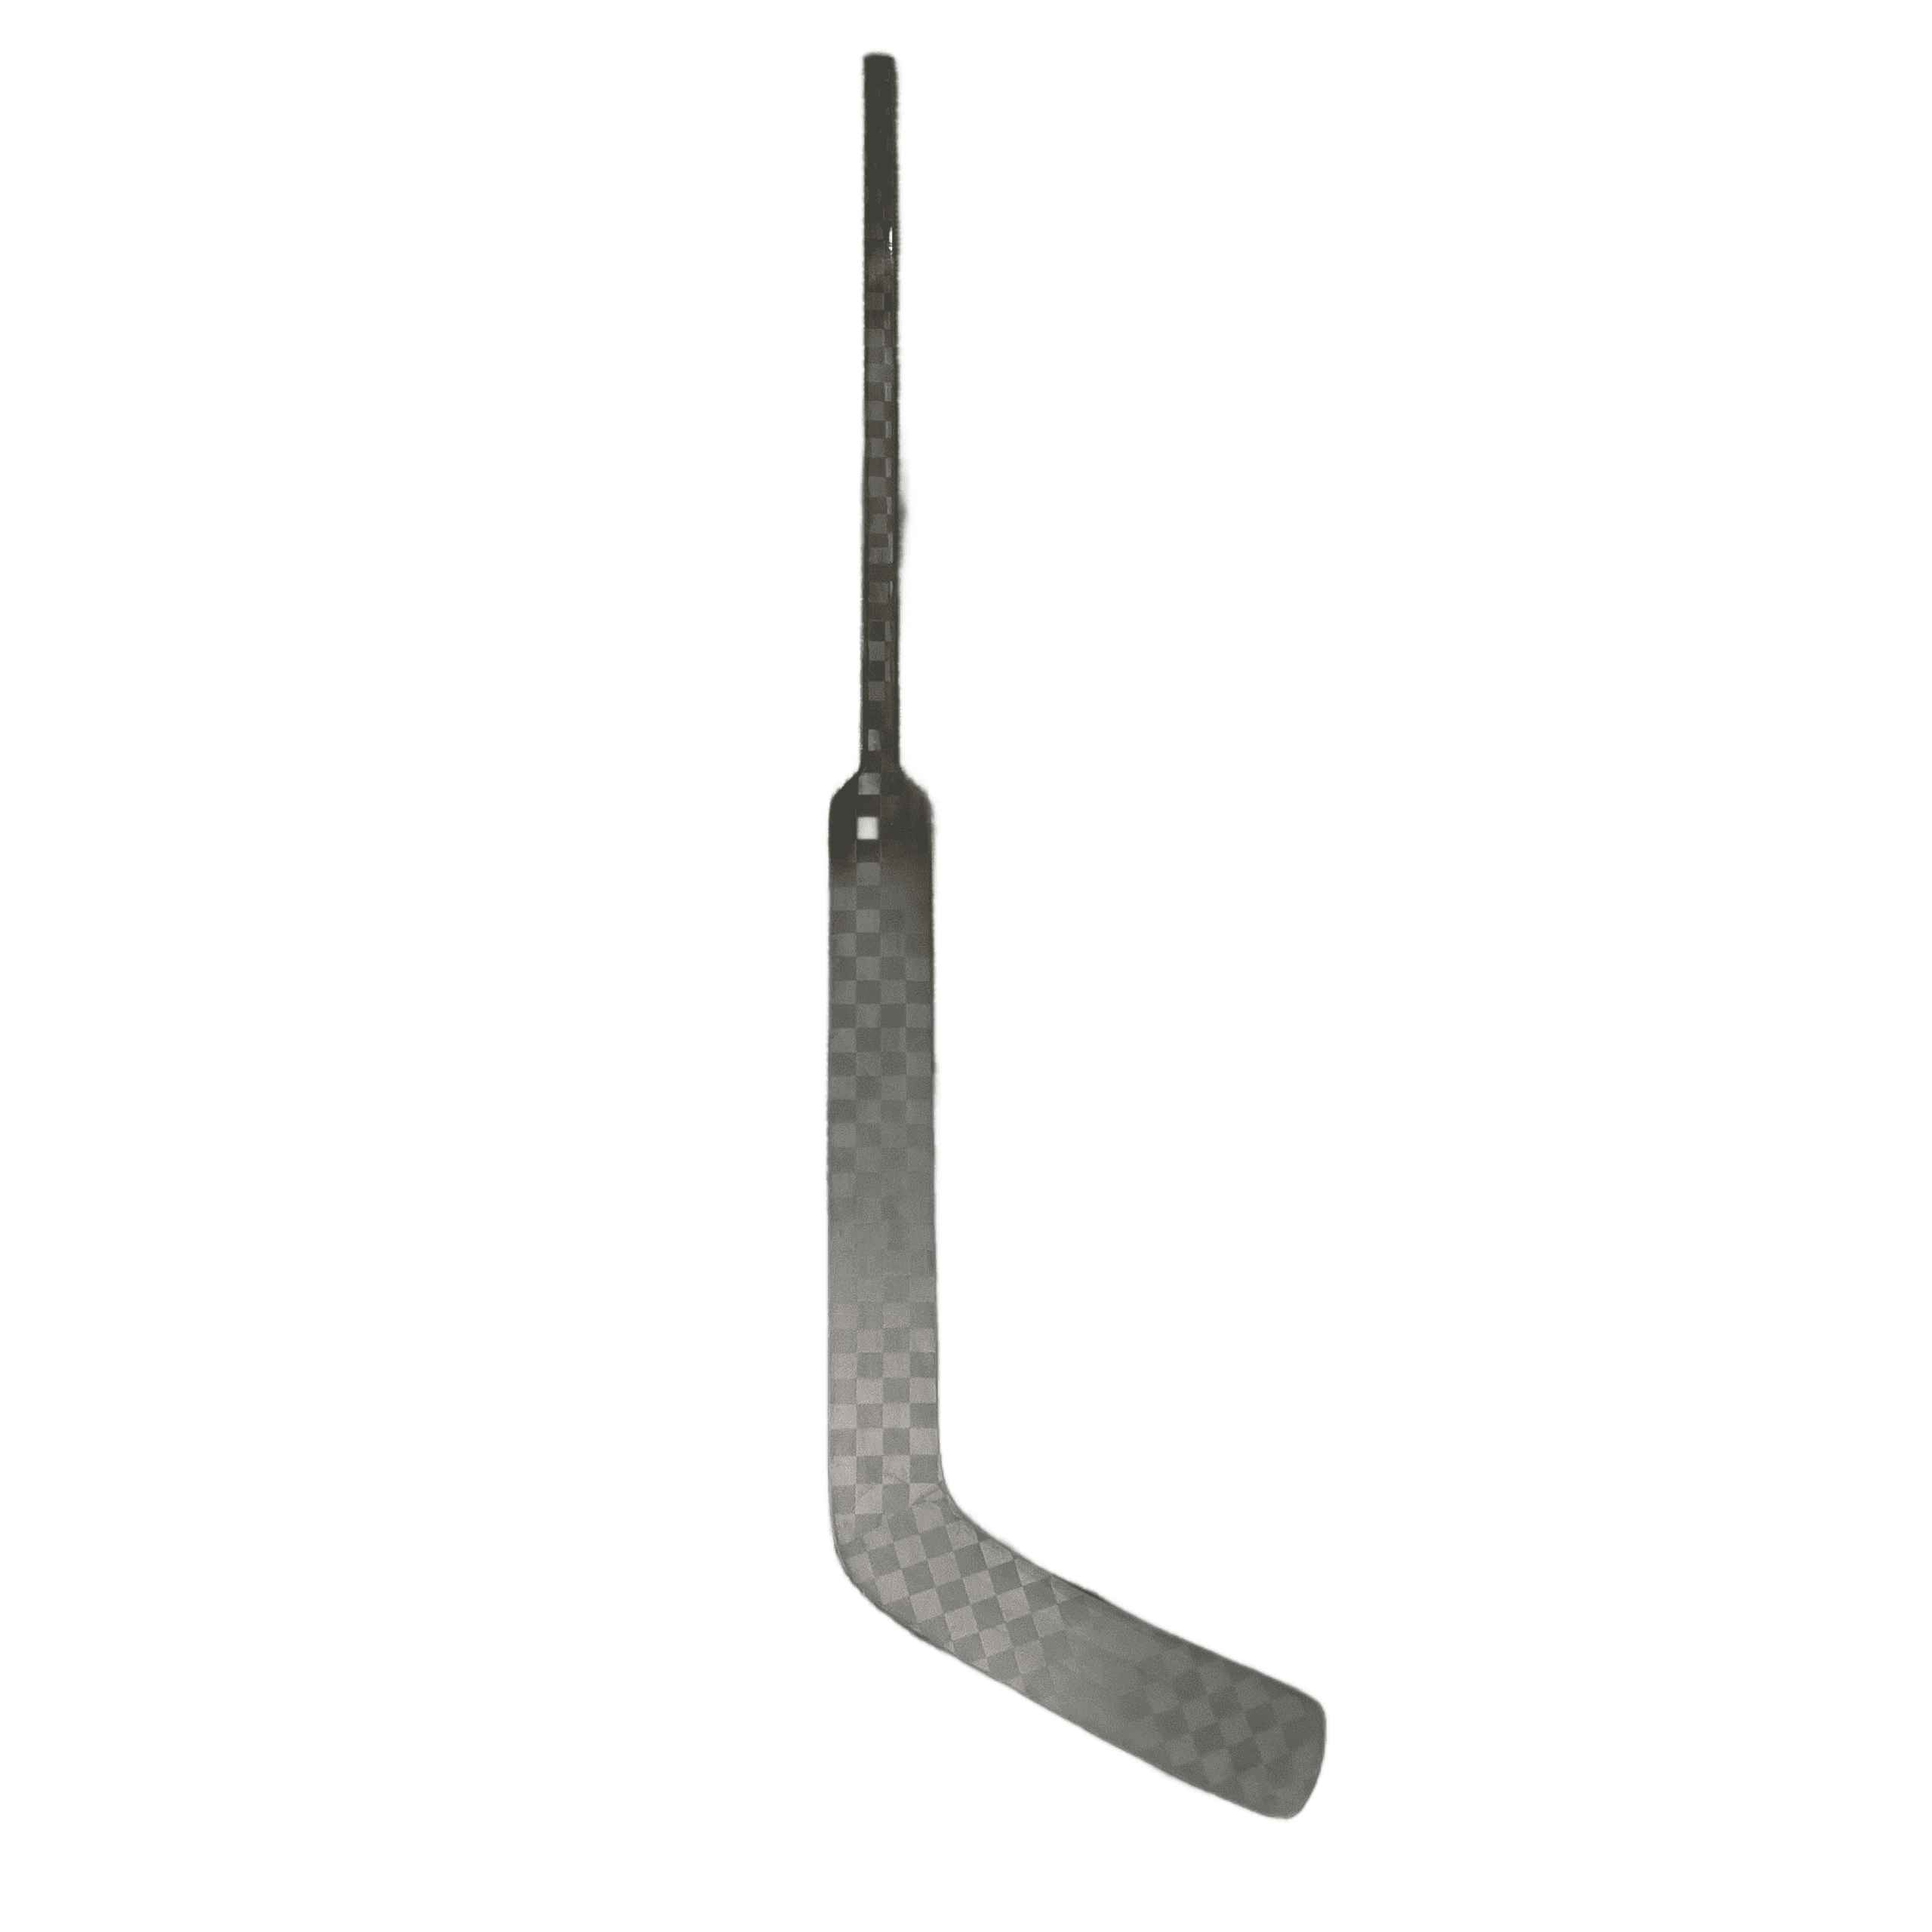 Professional grade hockey sticks